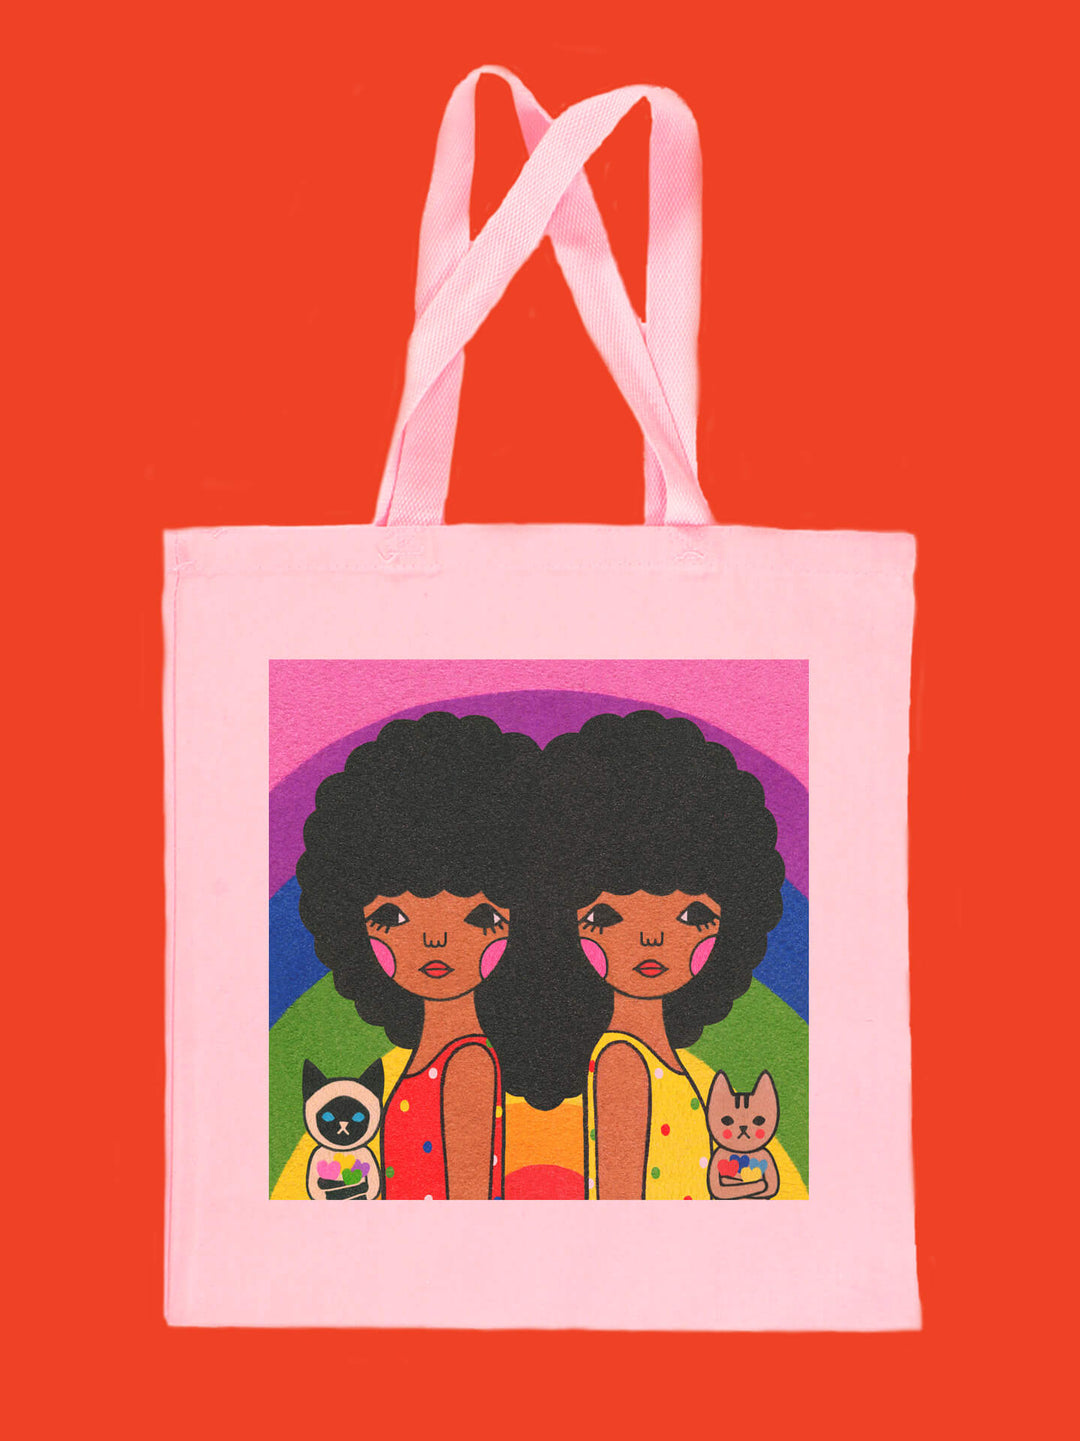 Kawaii Black women pink tote bag.